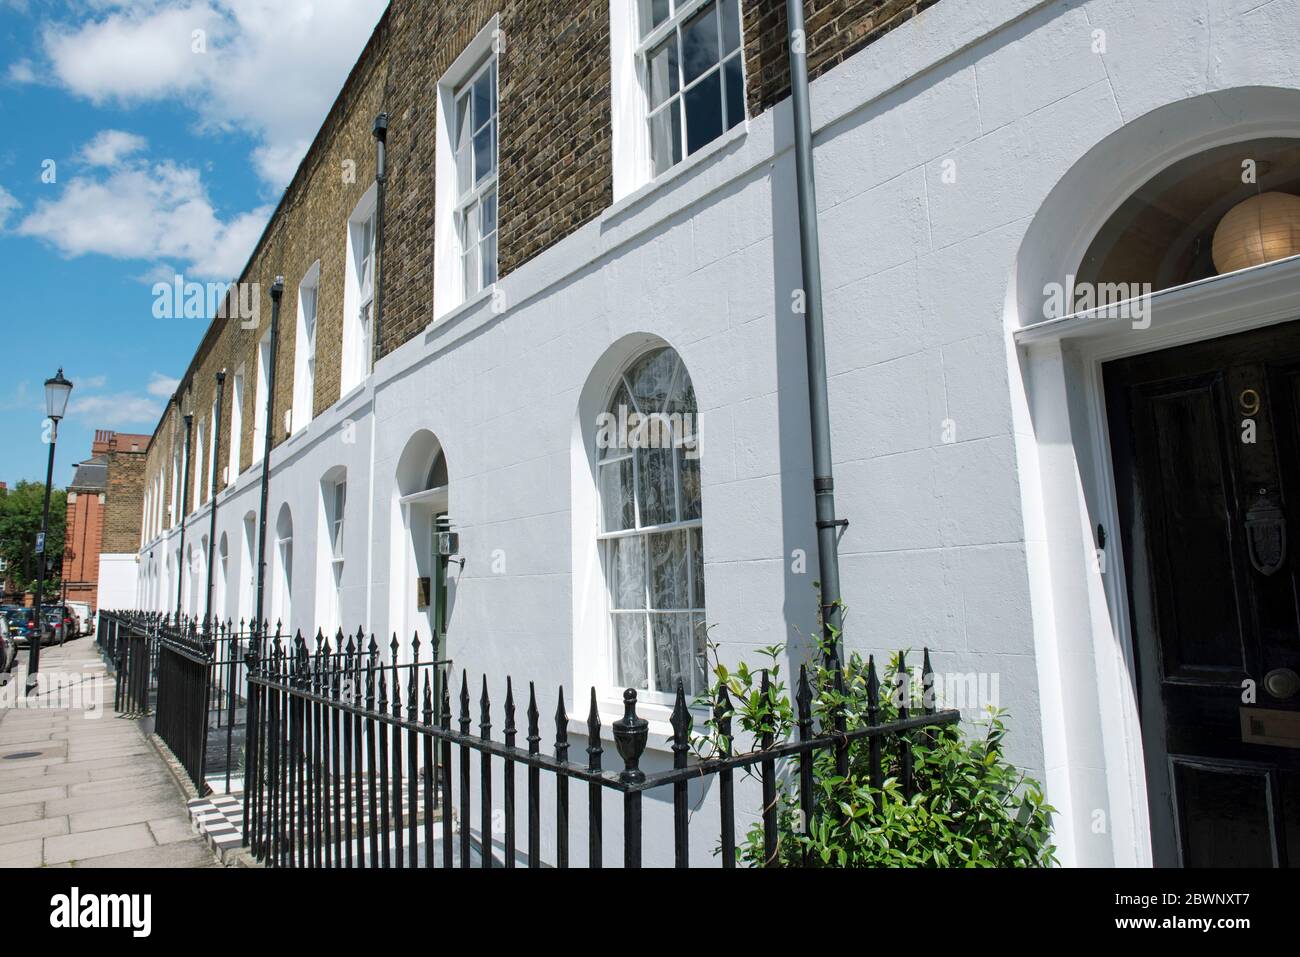 Terraced houses with railings St Luke's Street Royal London Borough of Kensington & Chelsea Stock Photo